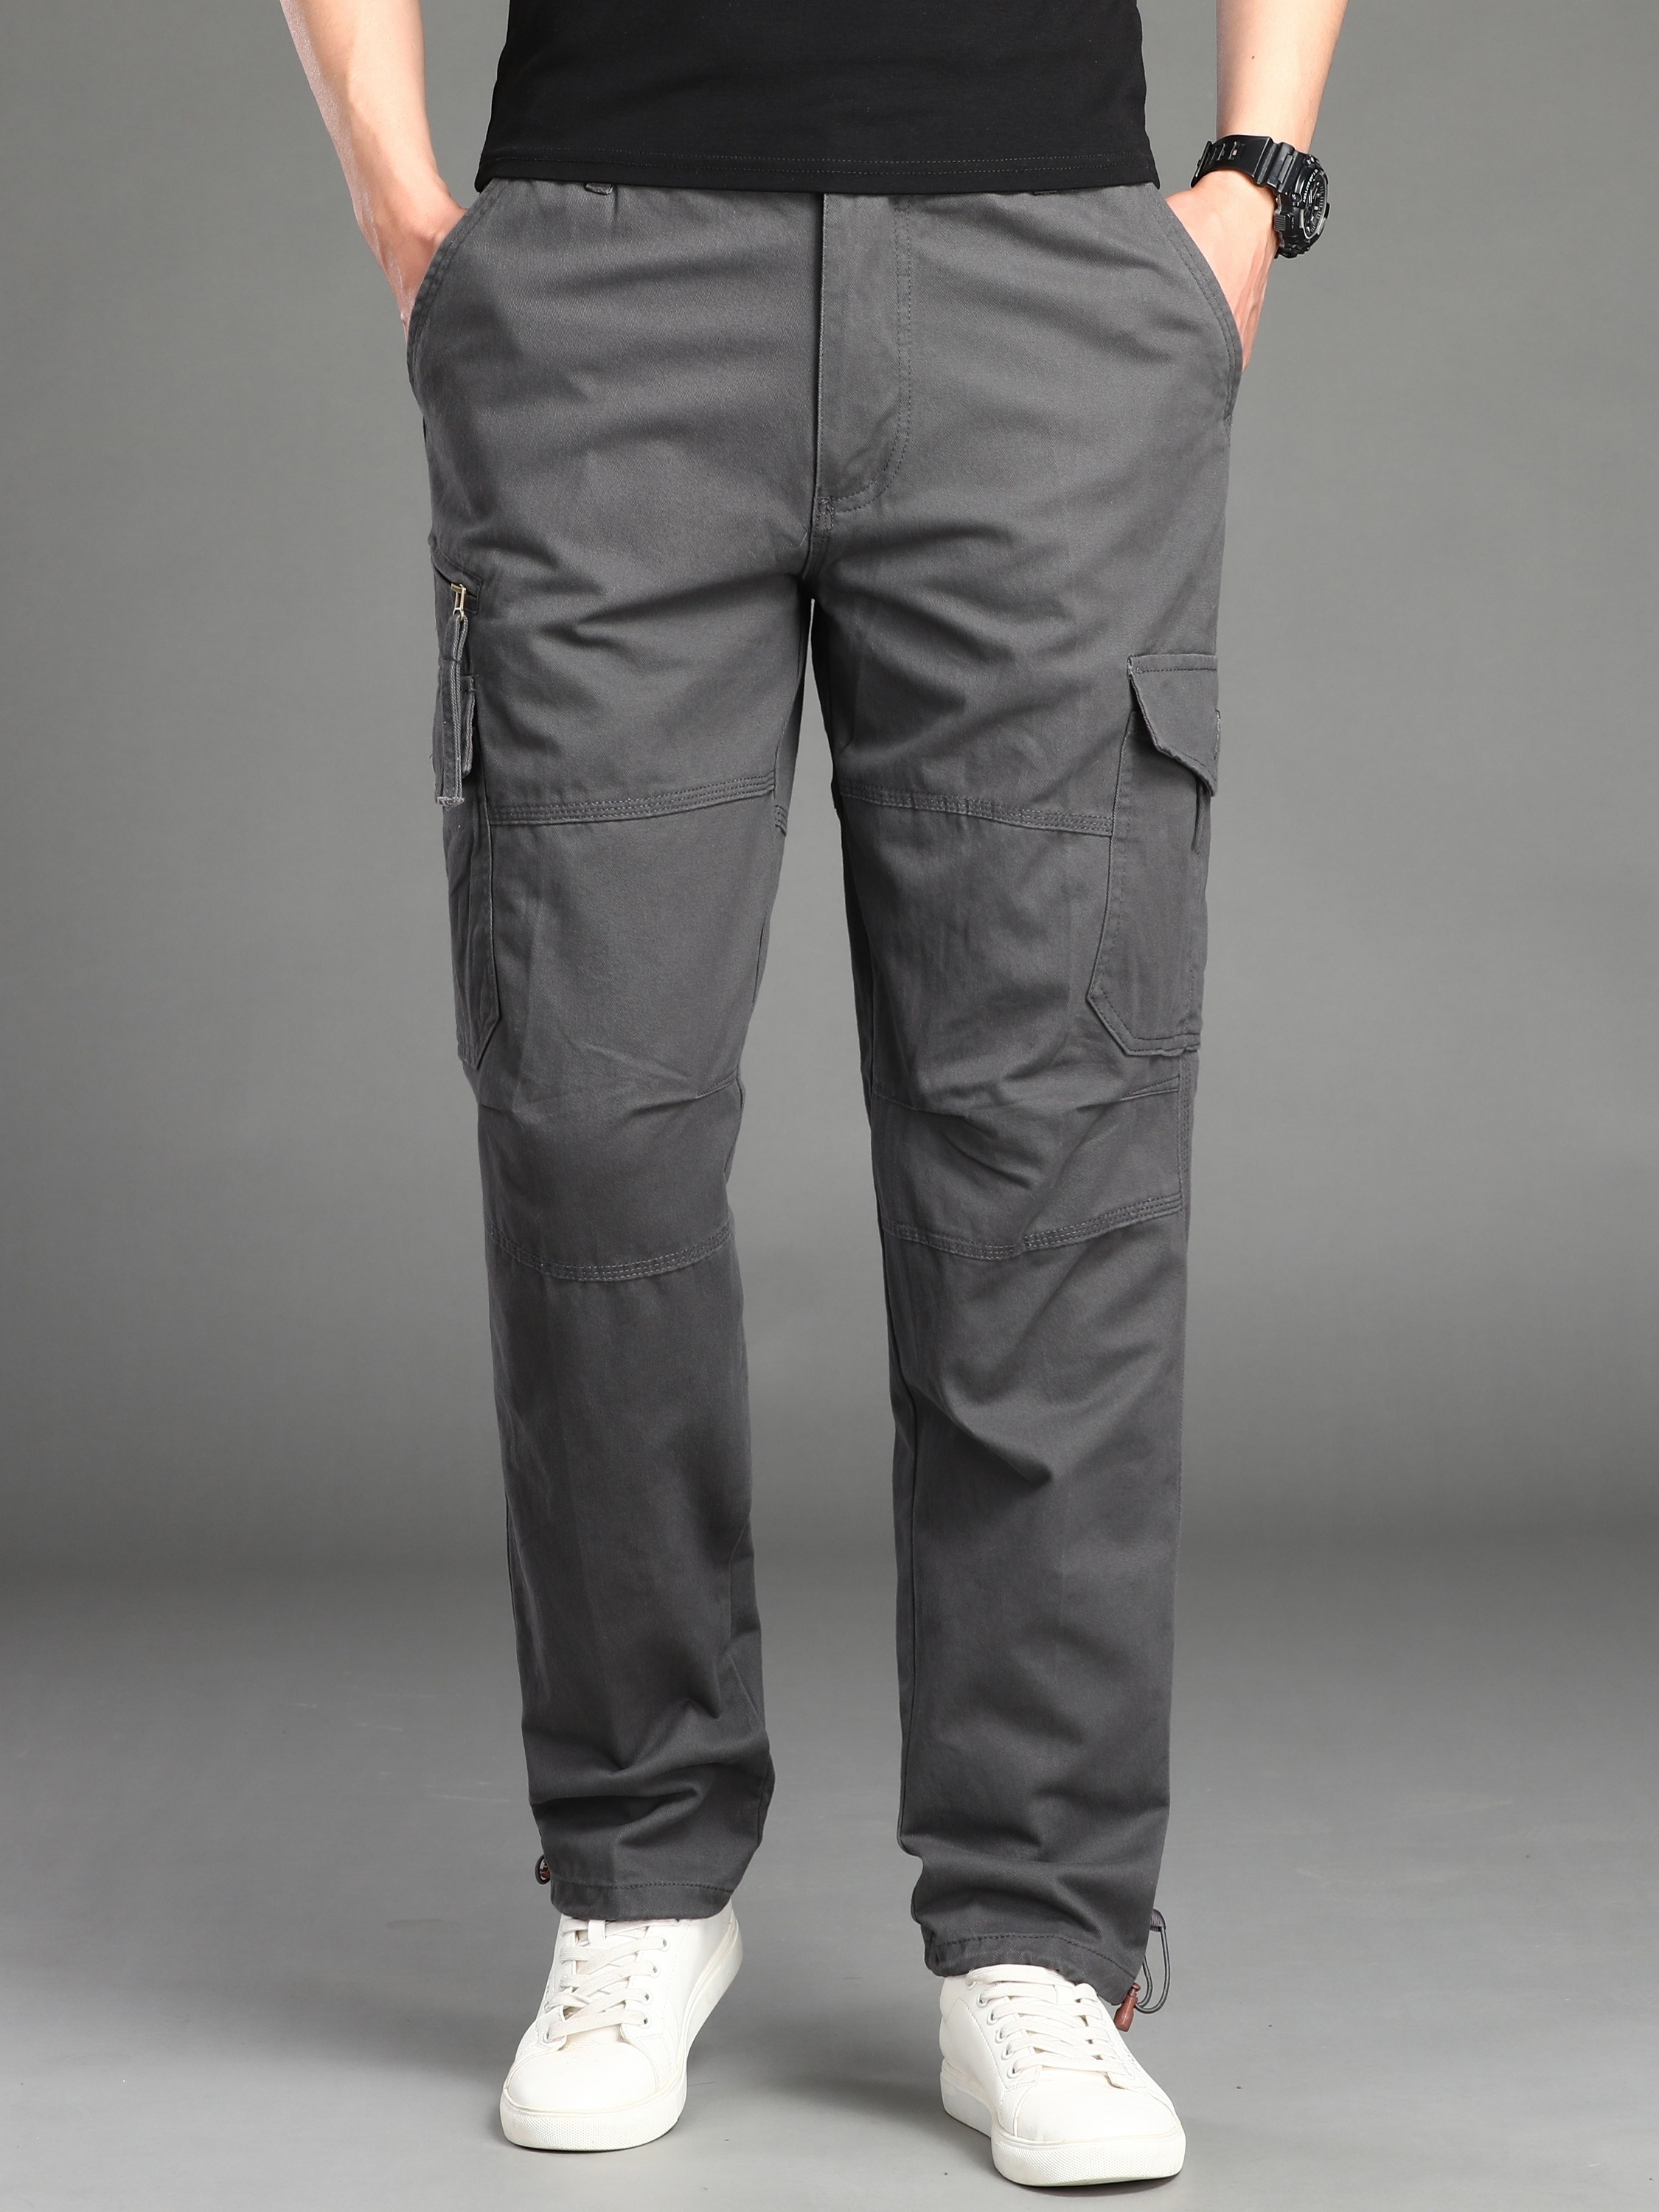 Color Blocking Multi Pocket Men's Tactical Pants, Loose Casual Outdoor  Pants, Men's Cargo Wear-resistant Pants For Hiking